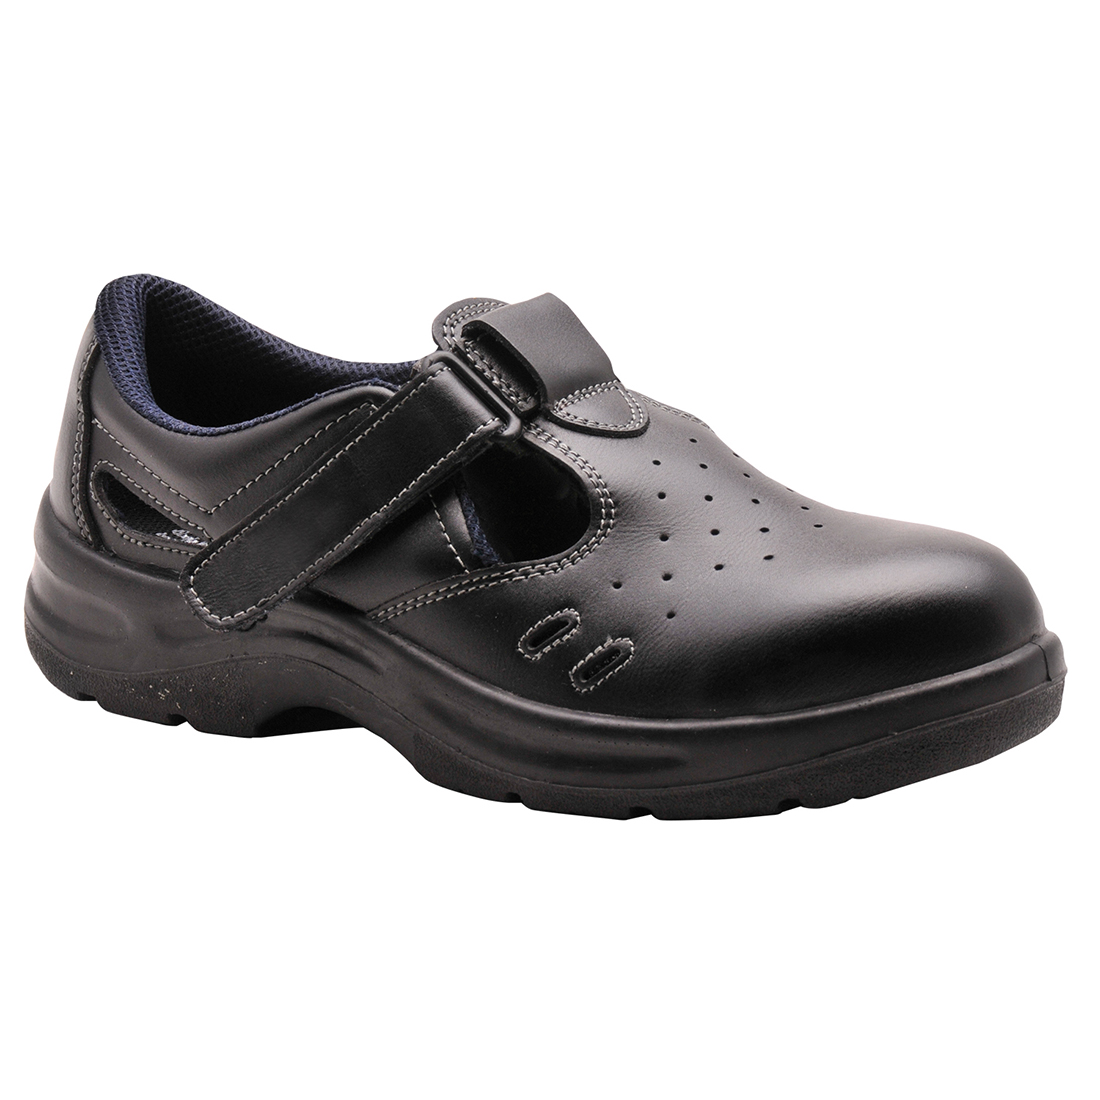 Steelite Safety Sandal S1 - Black